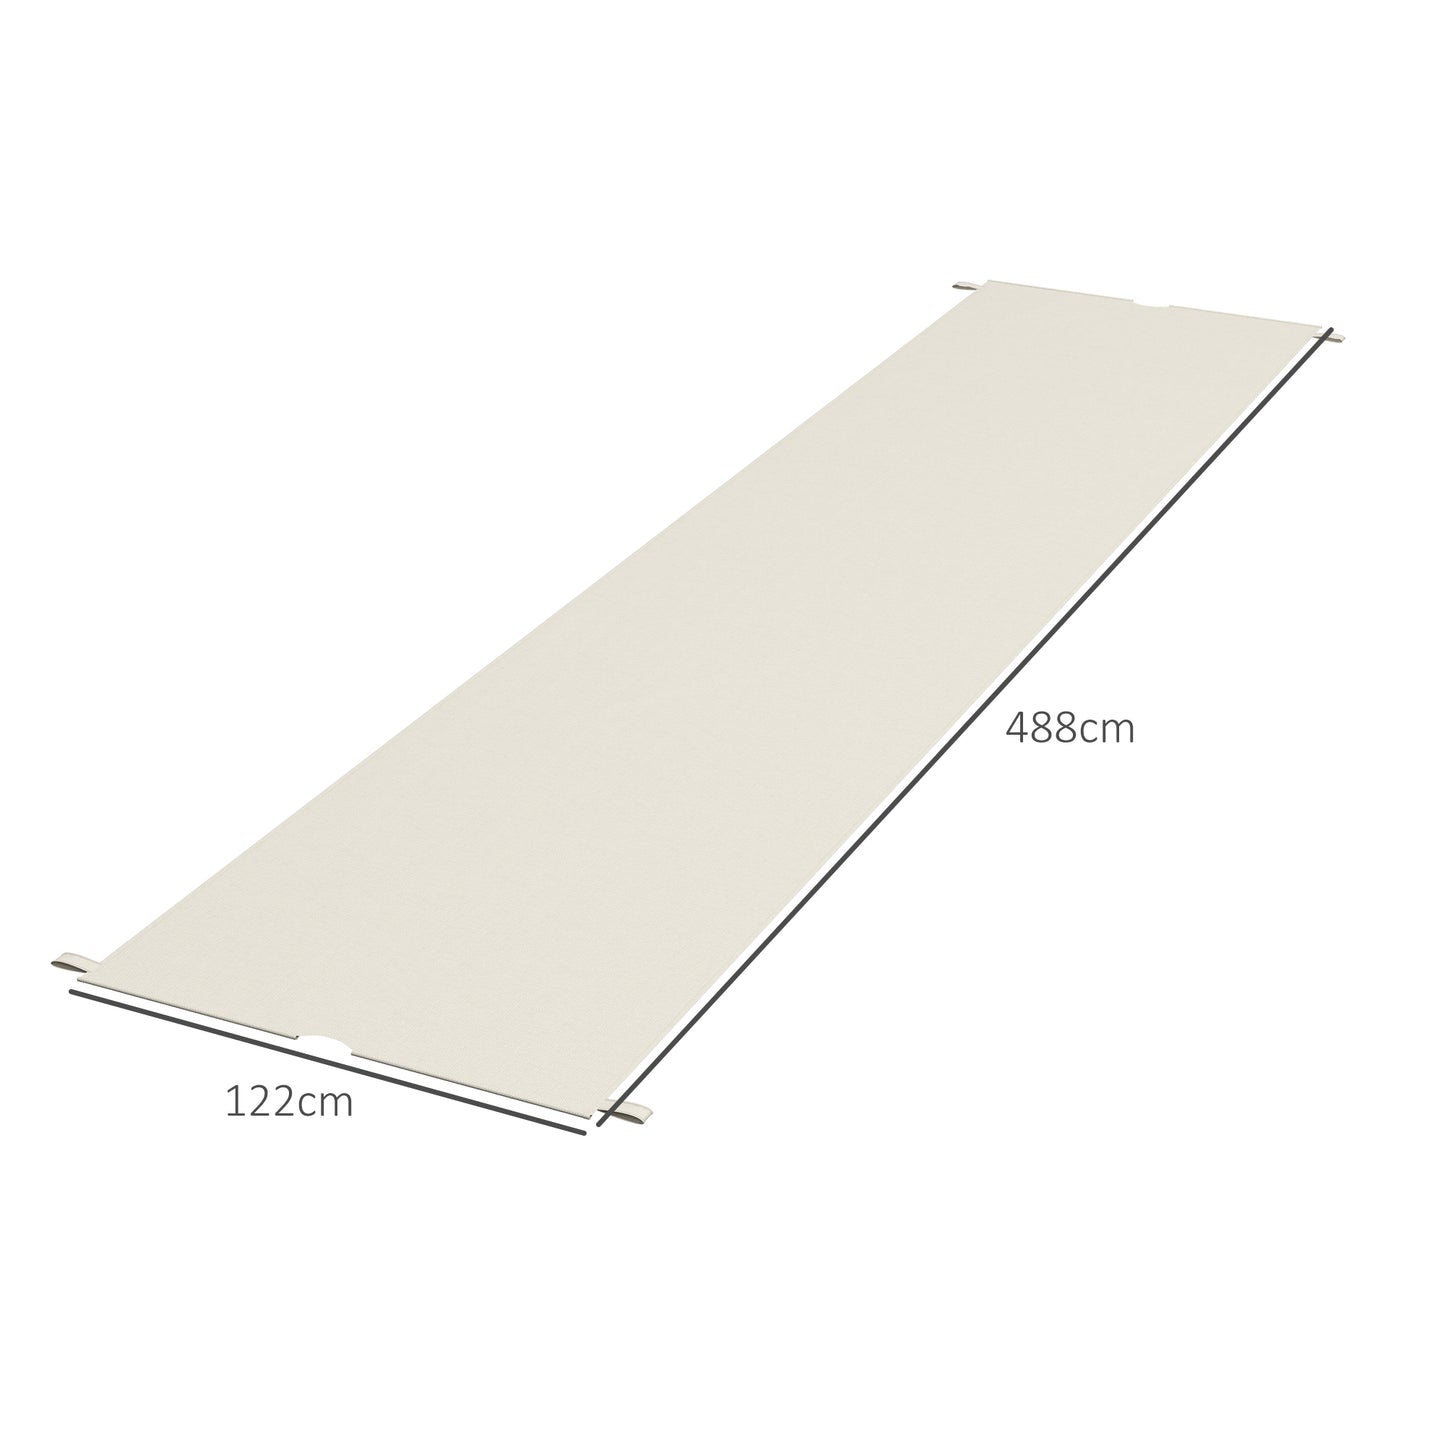 Outsunny 2 Pcs UV Protection Pergola Replacement Canopy, Pergola Shade Cover, Easy to Install, for 3 x 3(m) Pergola, Cream White